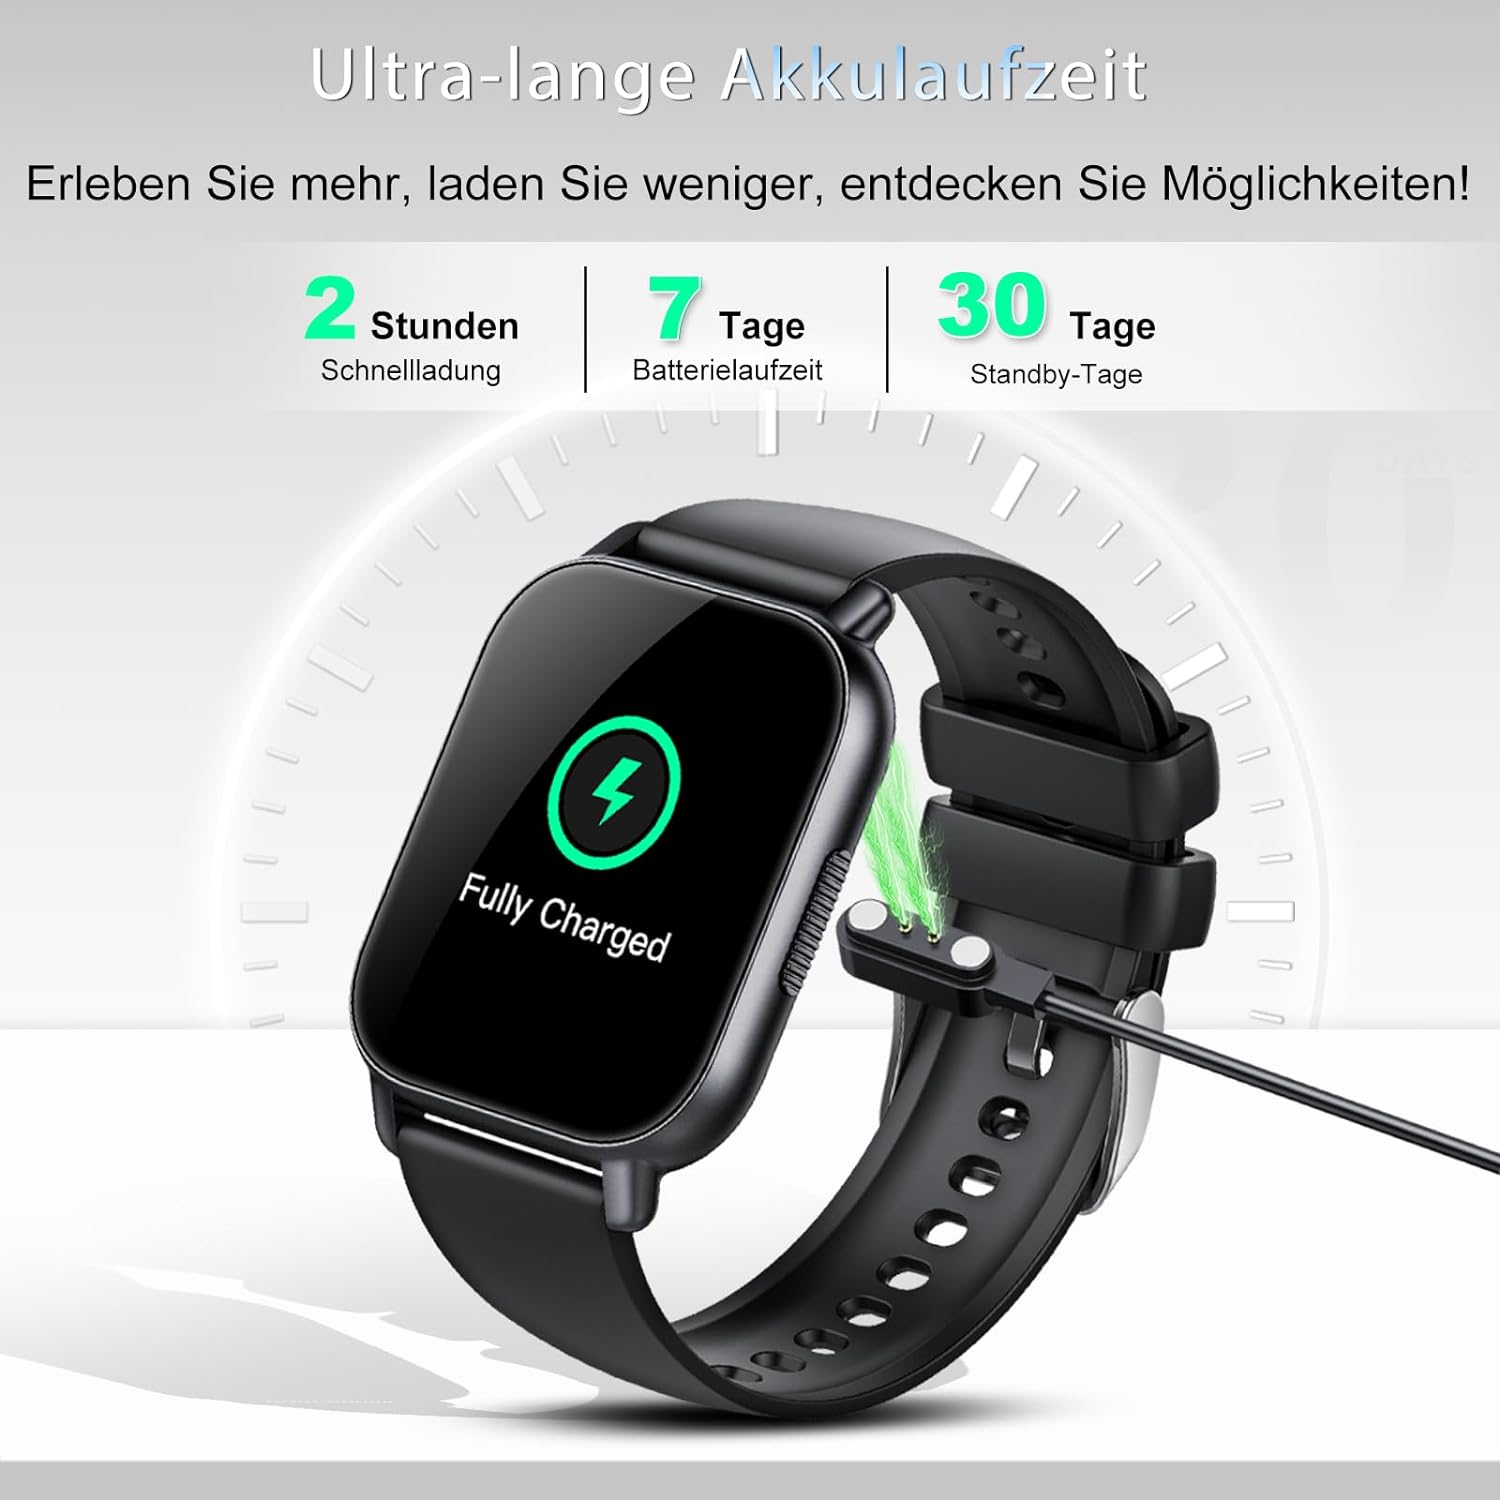 Smartwatch for Men and Women, 1.85 Inch Touchscreen Smart Watch with Calls, IP68 Waterproof Fitness Watch, Black